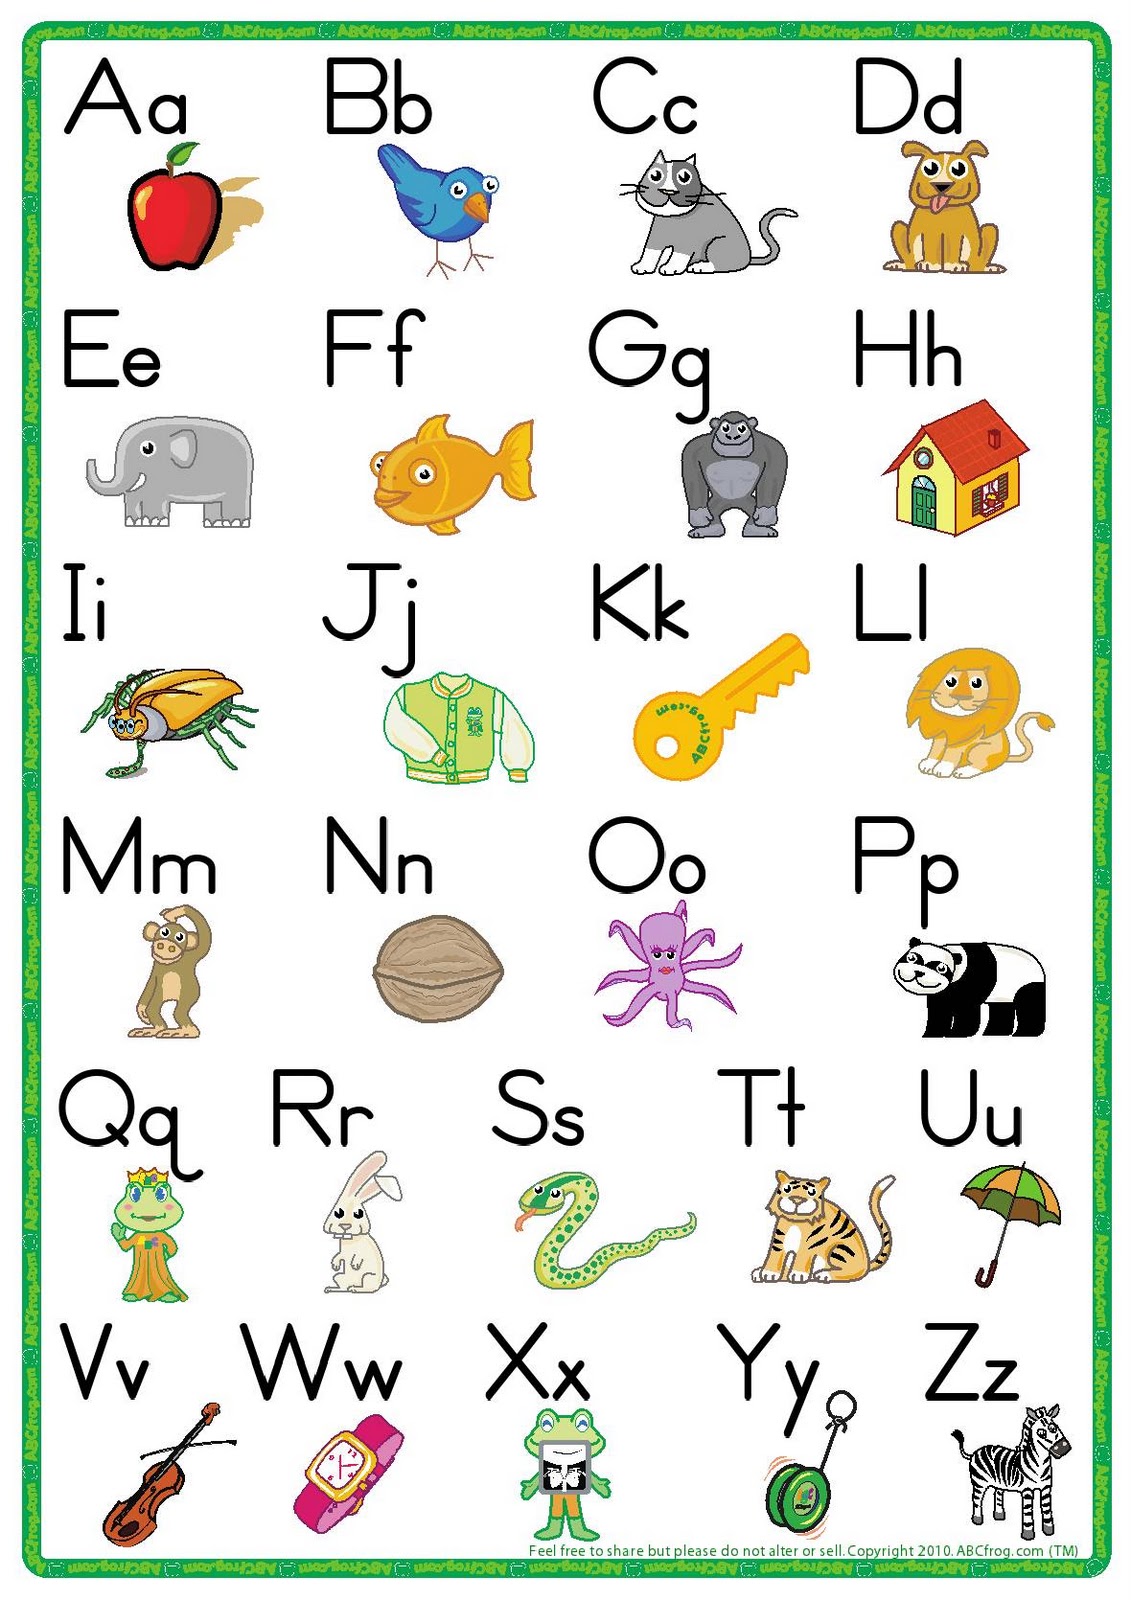 Wordwall abc. Английский алфавит Phonics. Английский алфавит для детей. Фоникс английский алфавит. English Alphabet for children.